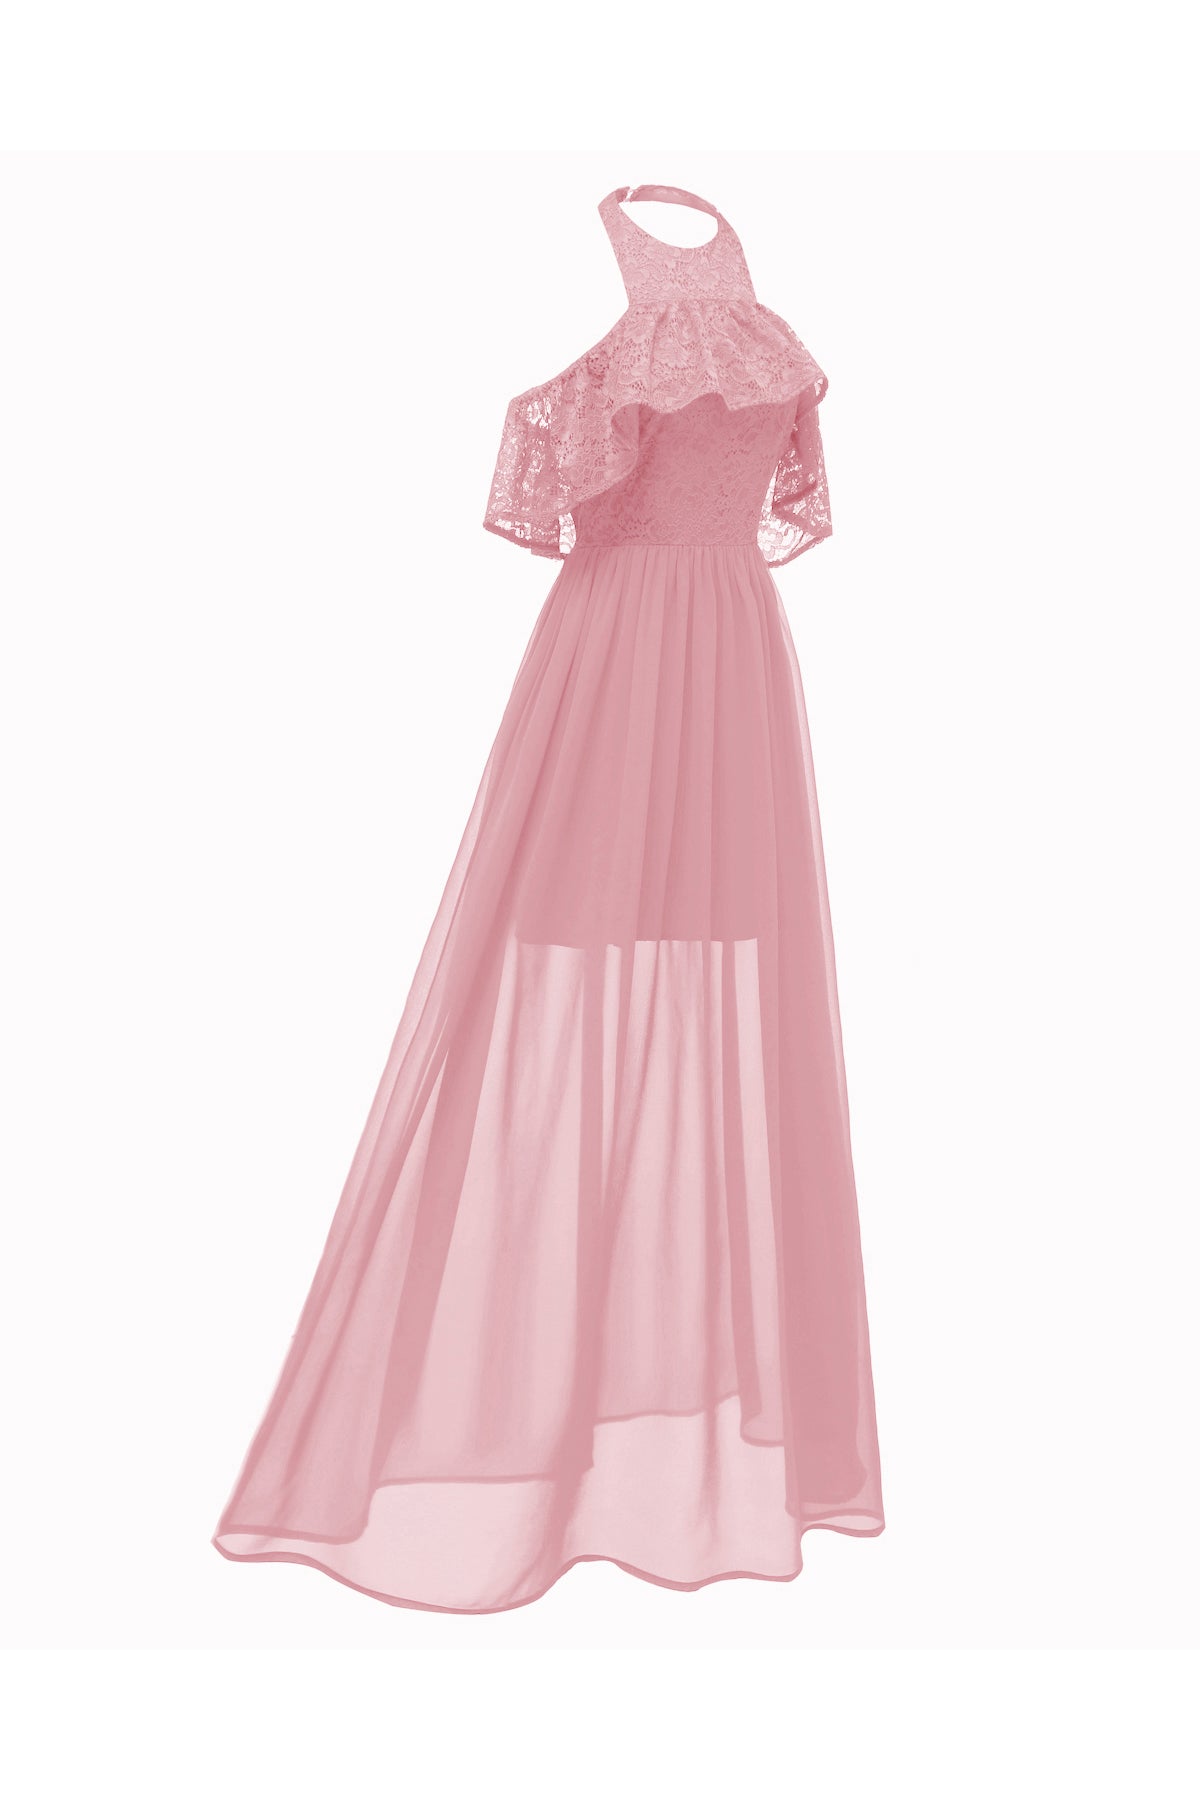 Sleeveless Halter Chiffon Prom Dresses